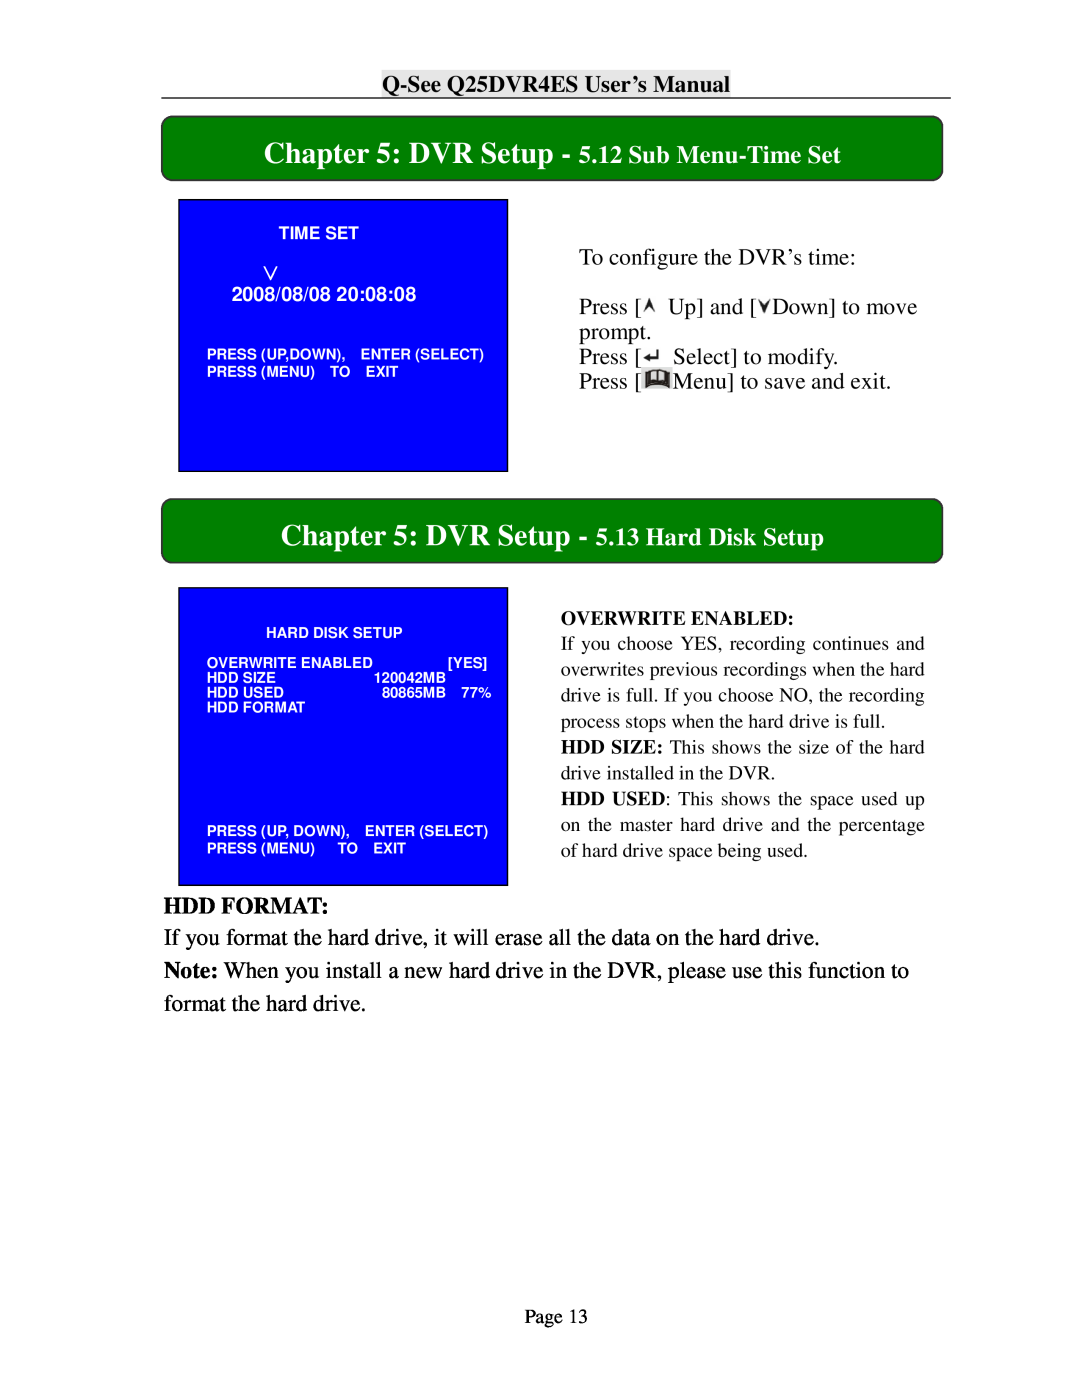 Q-See DVR Setup - 5.12 Sub Menu-TimeSet, DVR Setup - 5.13 Hard Disk Setup, Q-SeeQ25DVR4ES User’s Manual, Hdd Format 